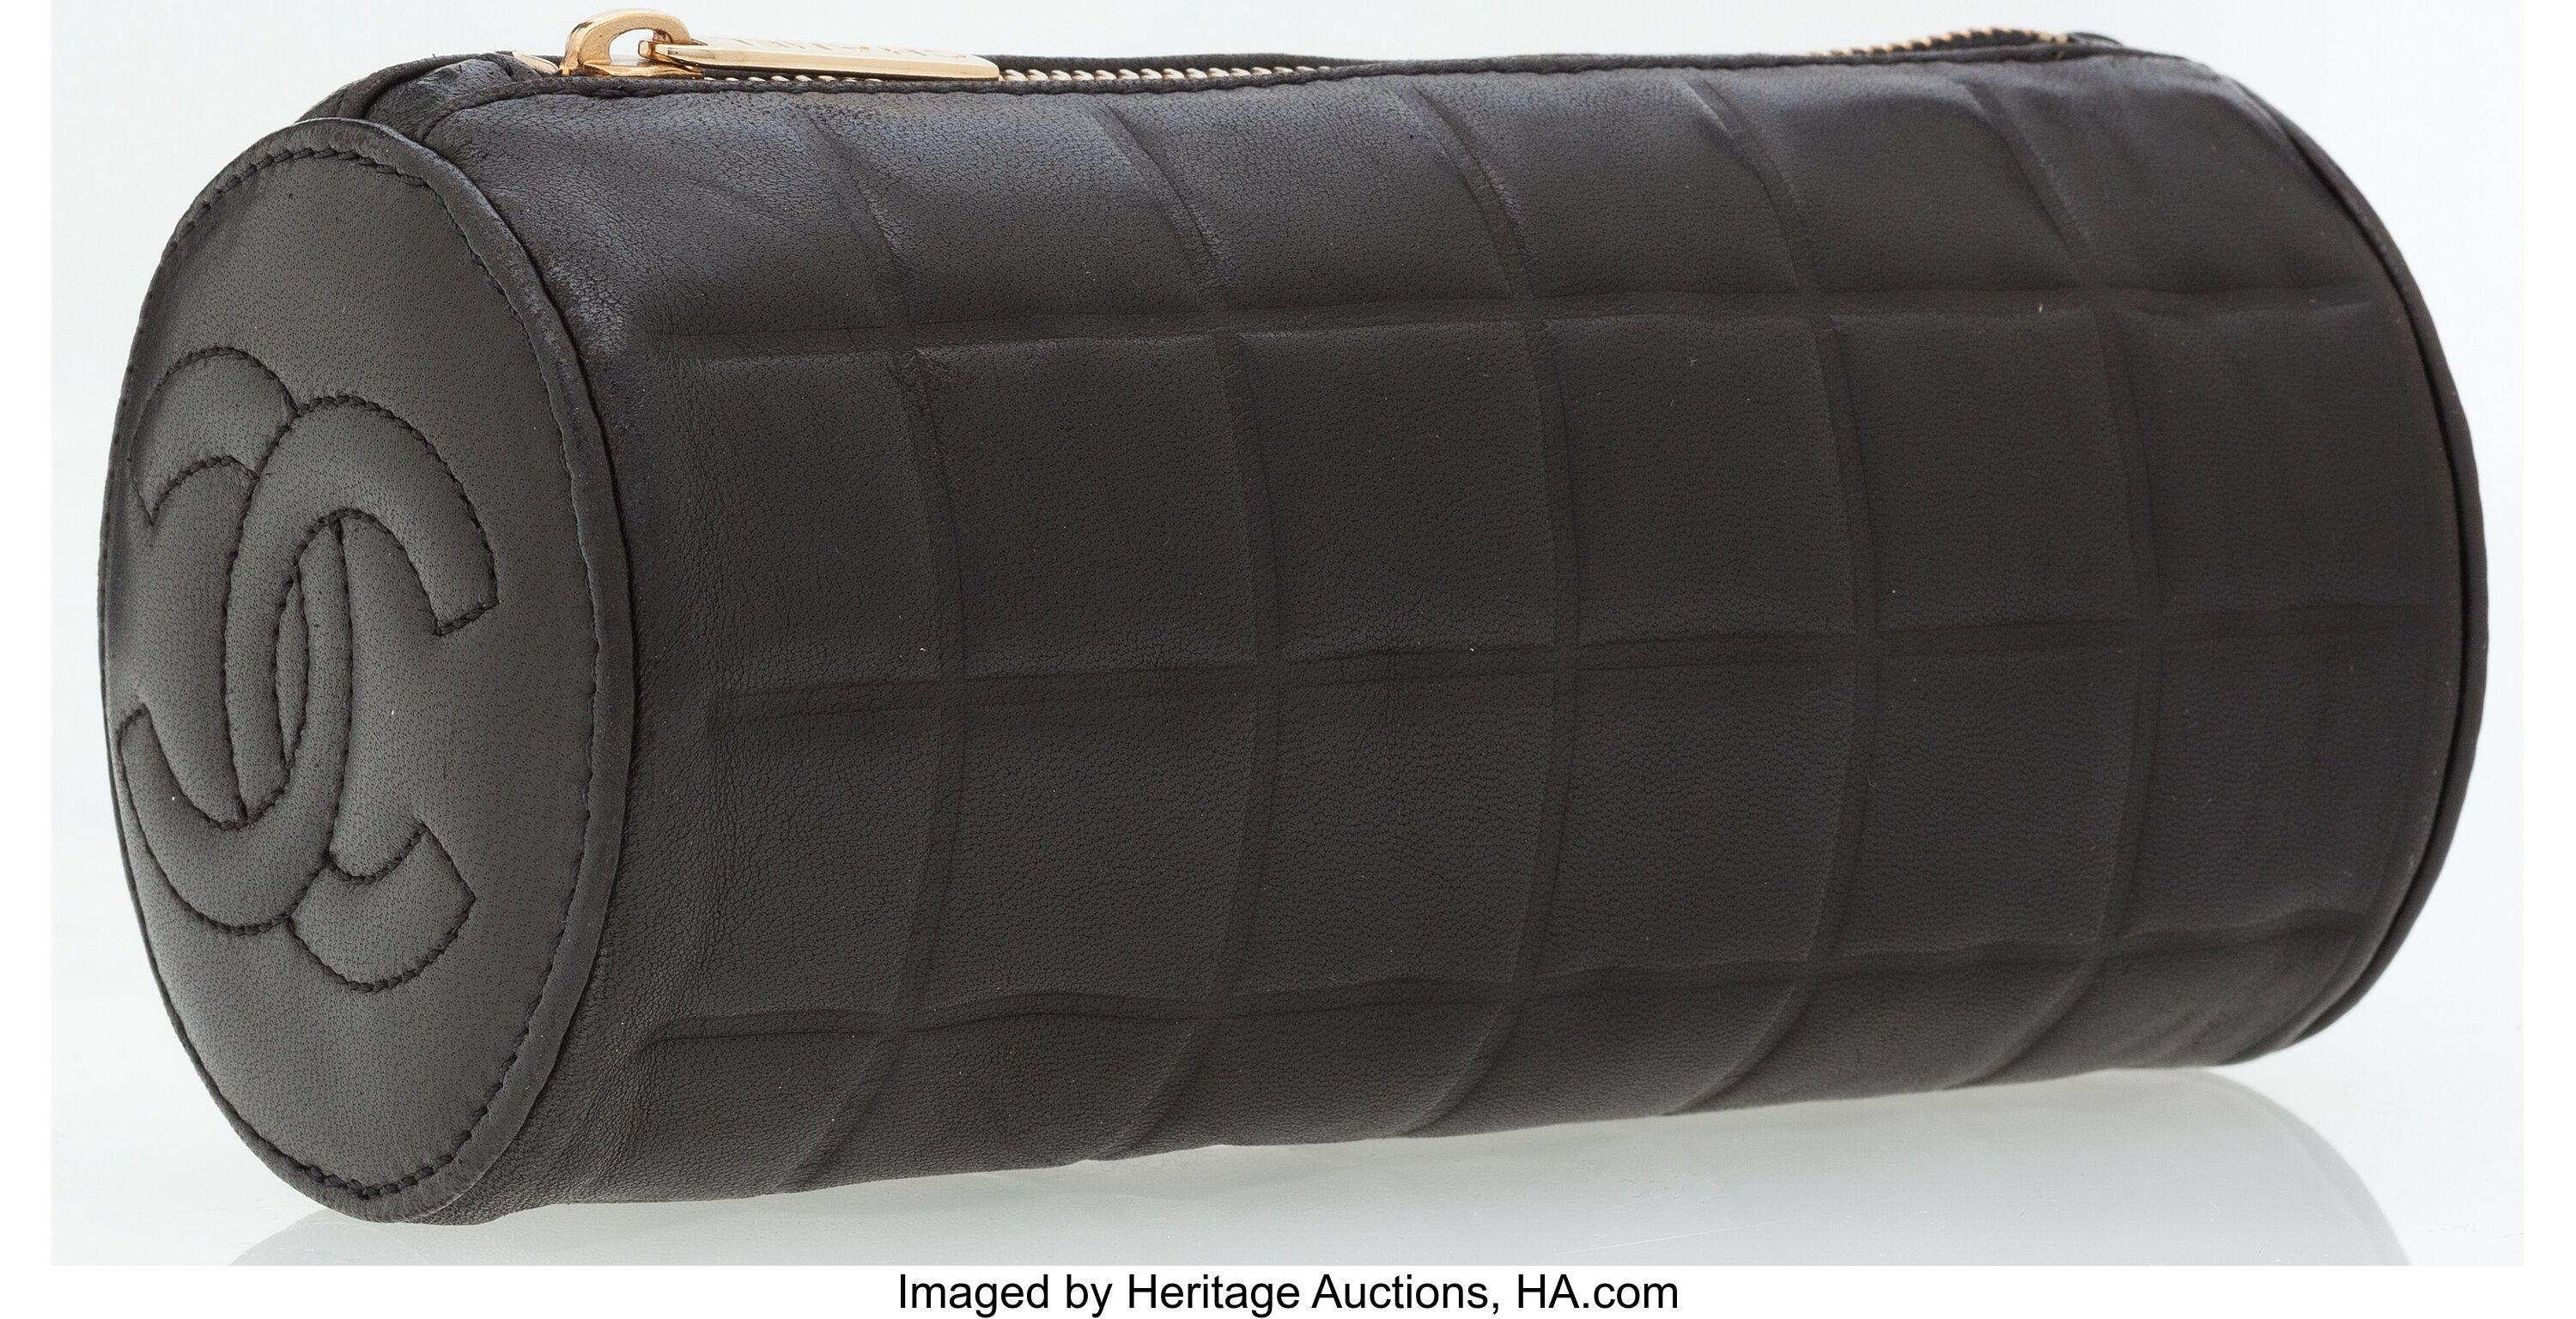 At Auction: Chanel Vintage Black Quilted Calfskin CC Logo Vanity Bag